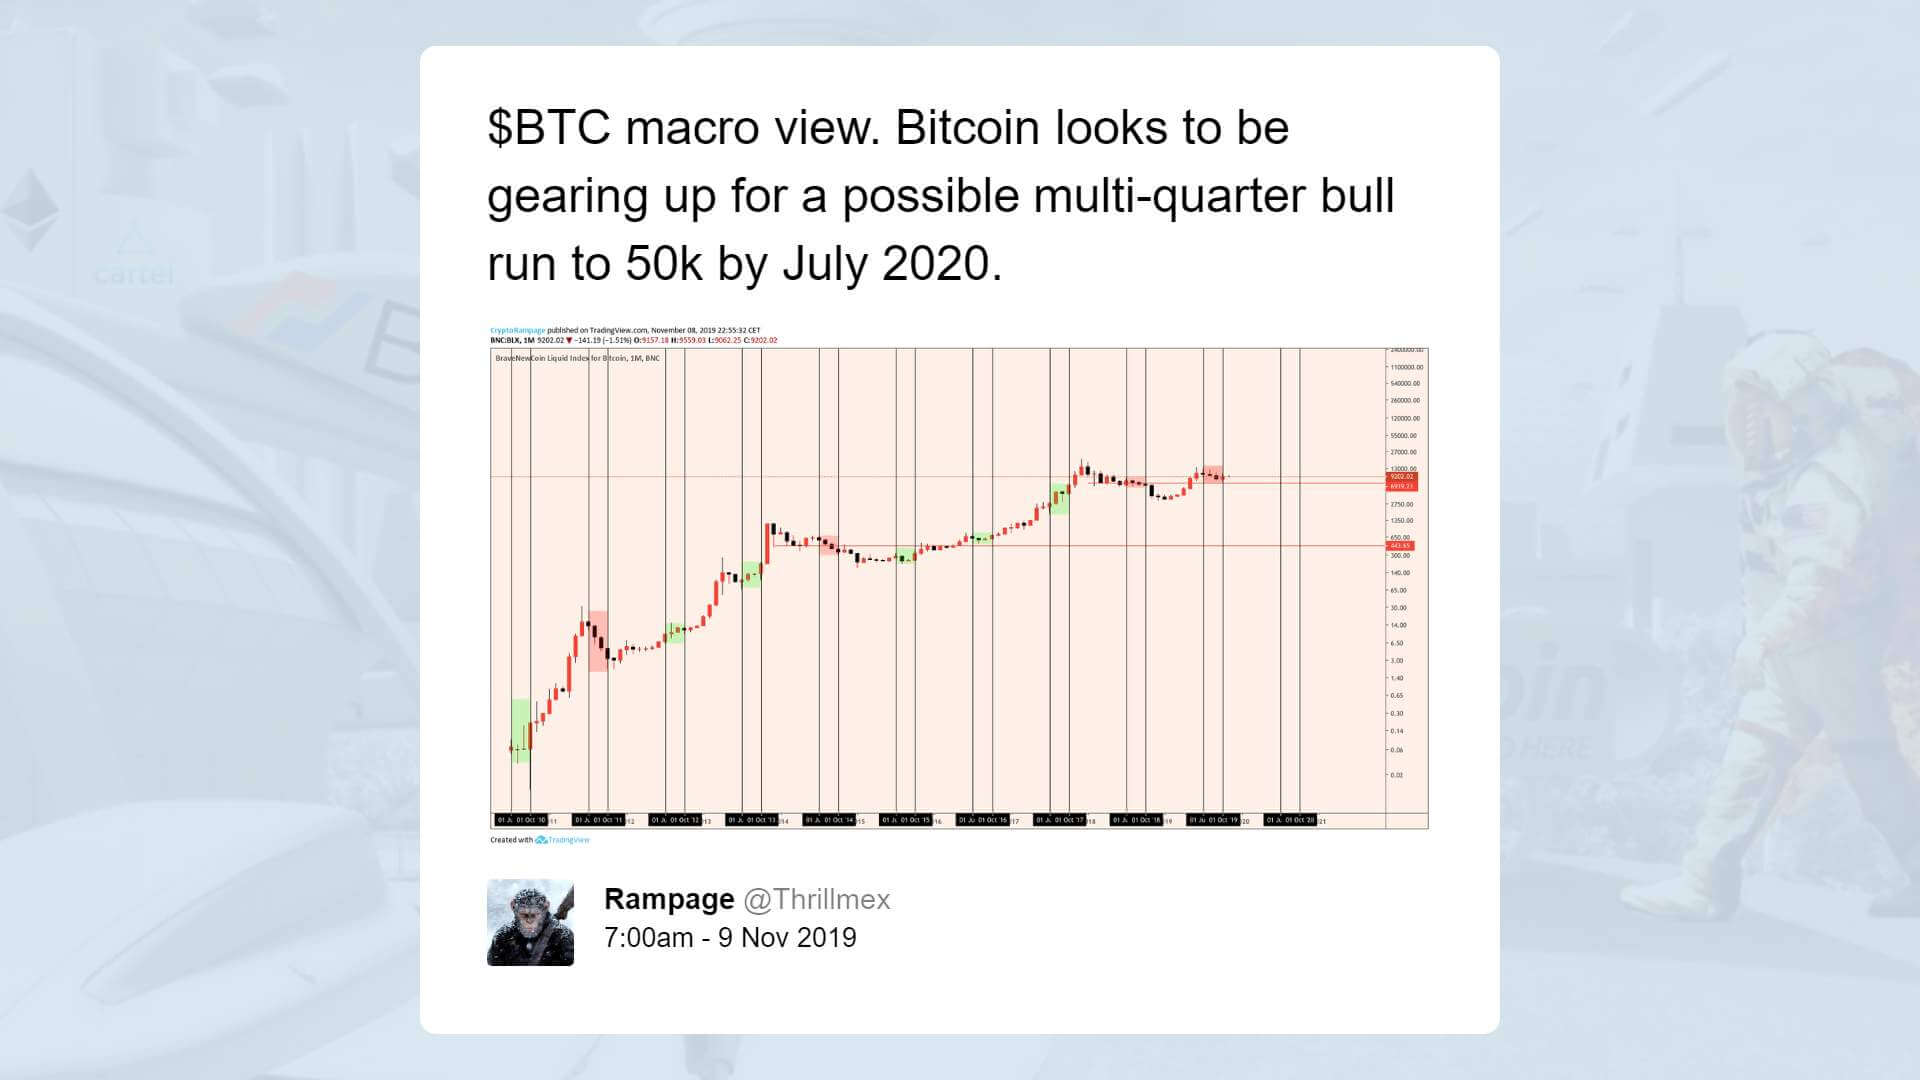 Why one trader thinks Bitcoin may begin a mega bull run and reach $50k by July 2020